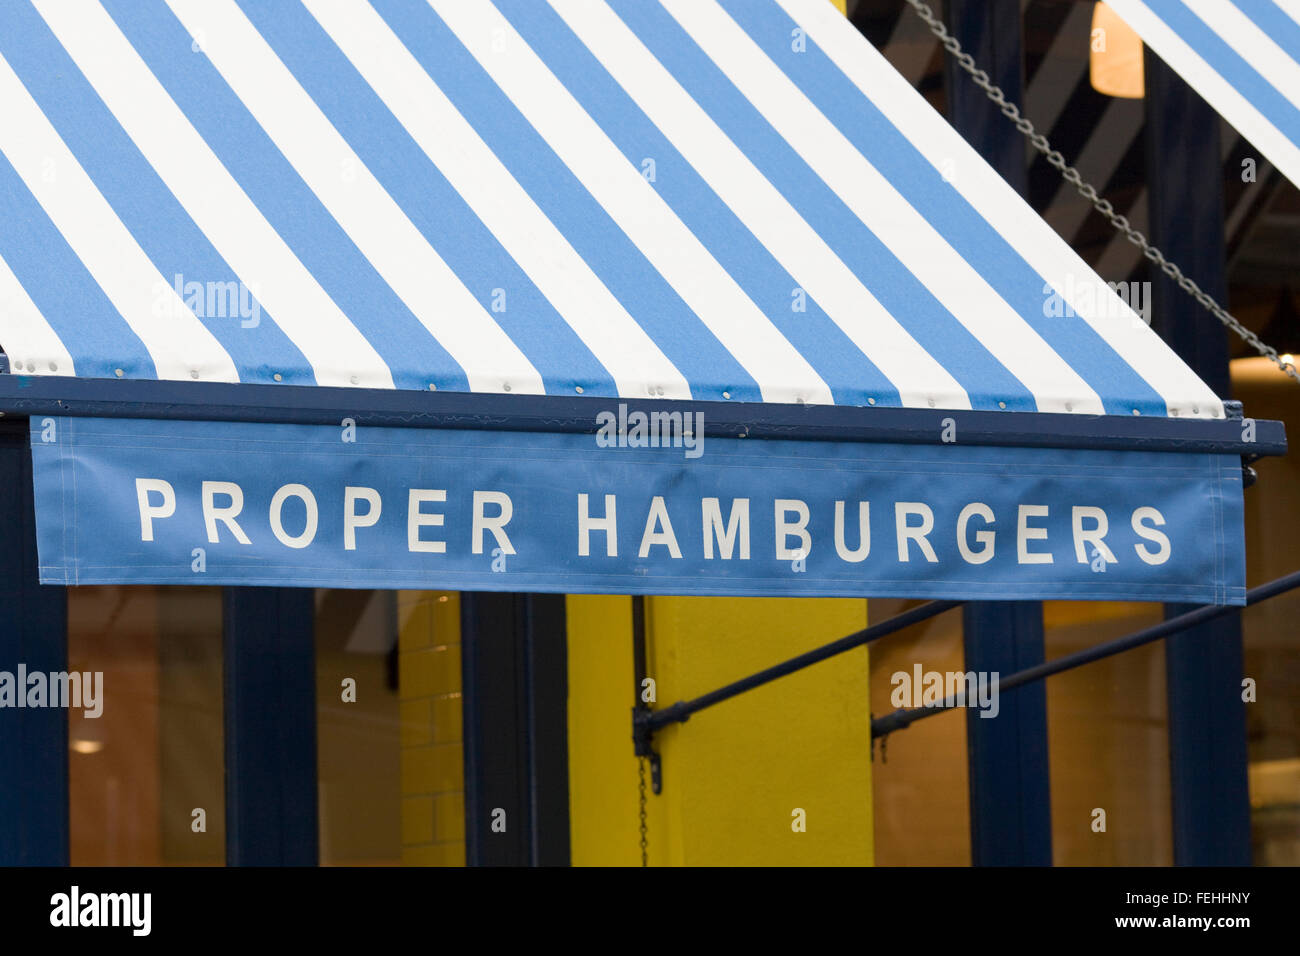 Proper Hamburger Awning Stock Photo